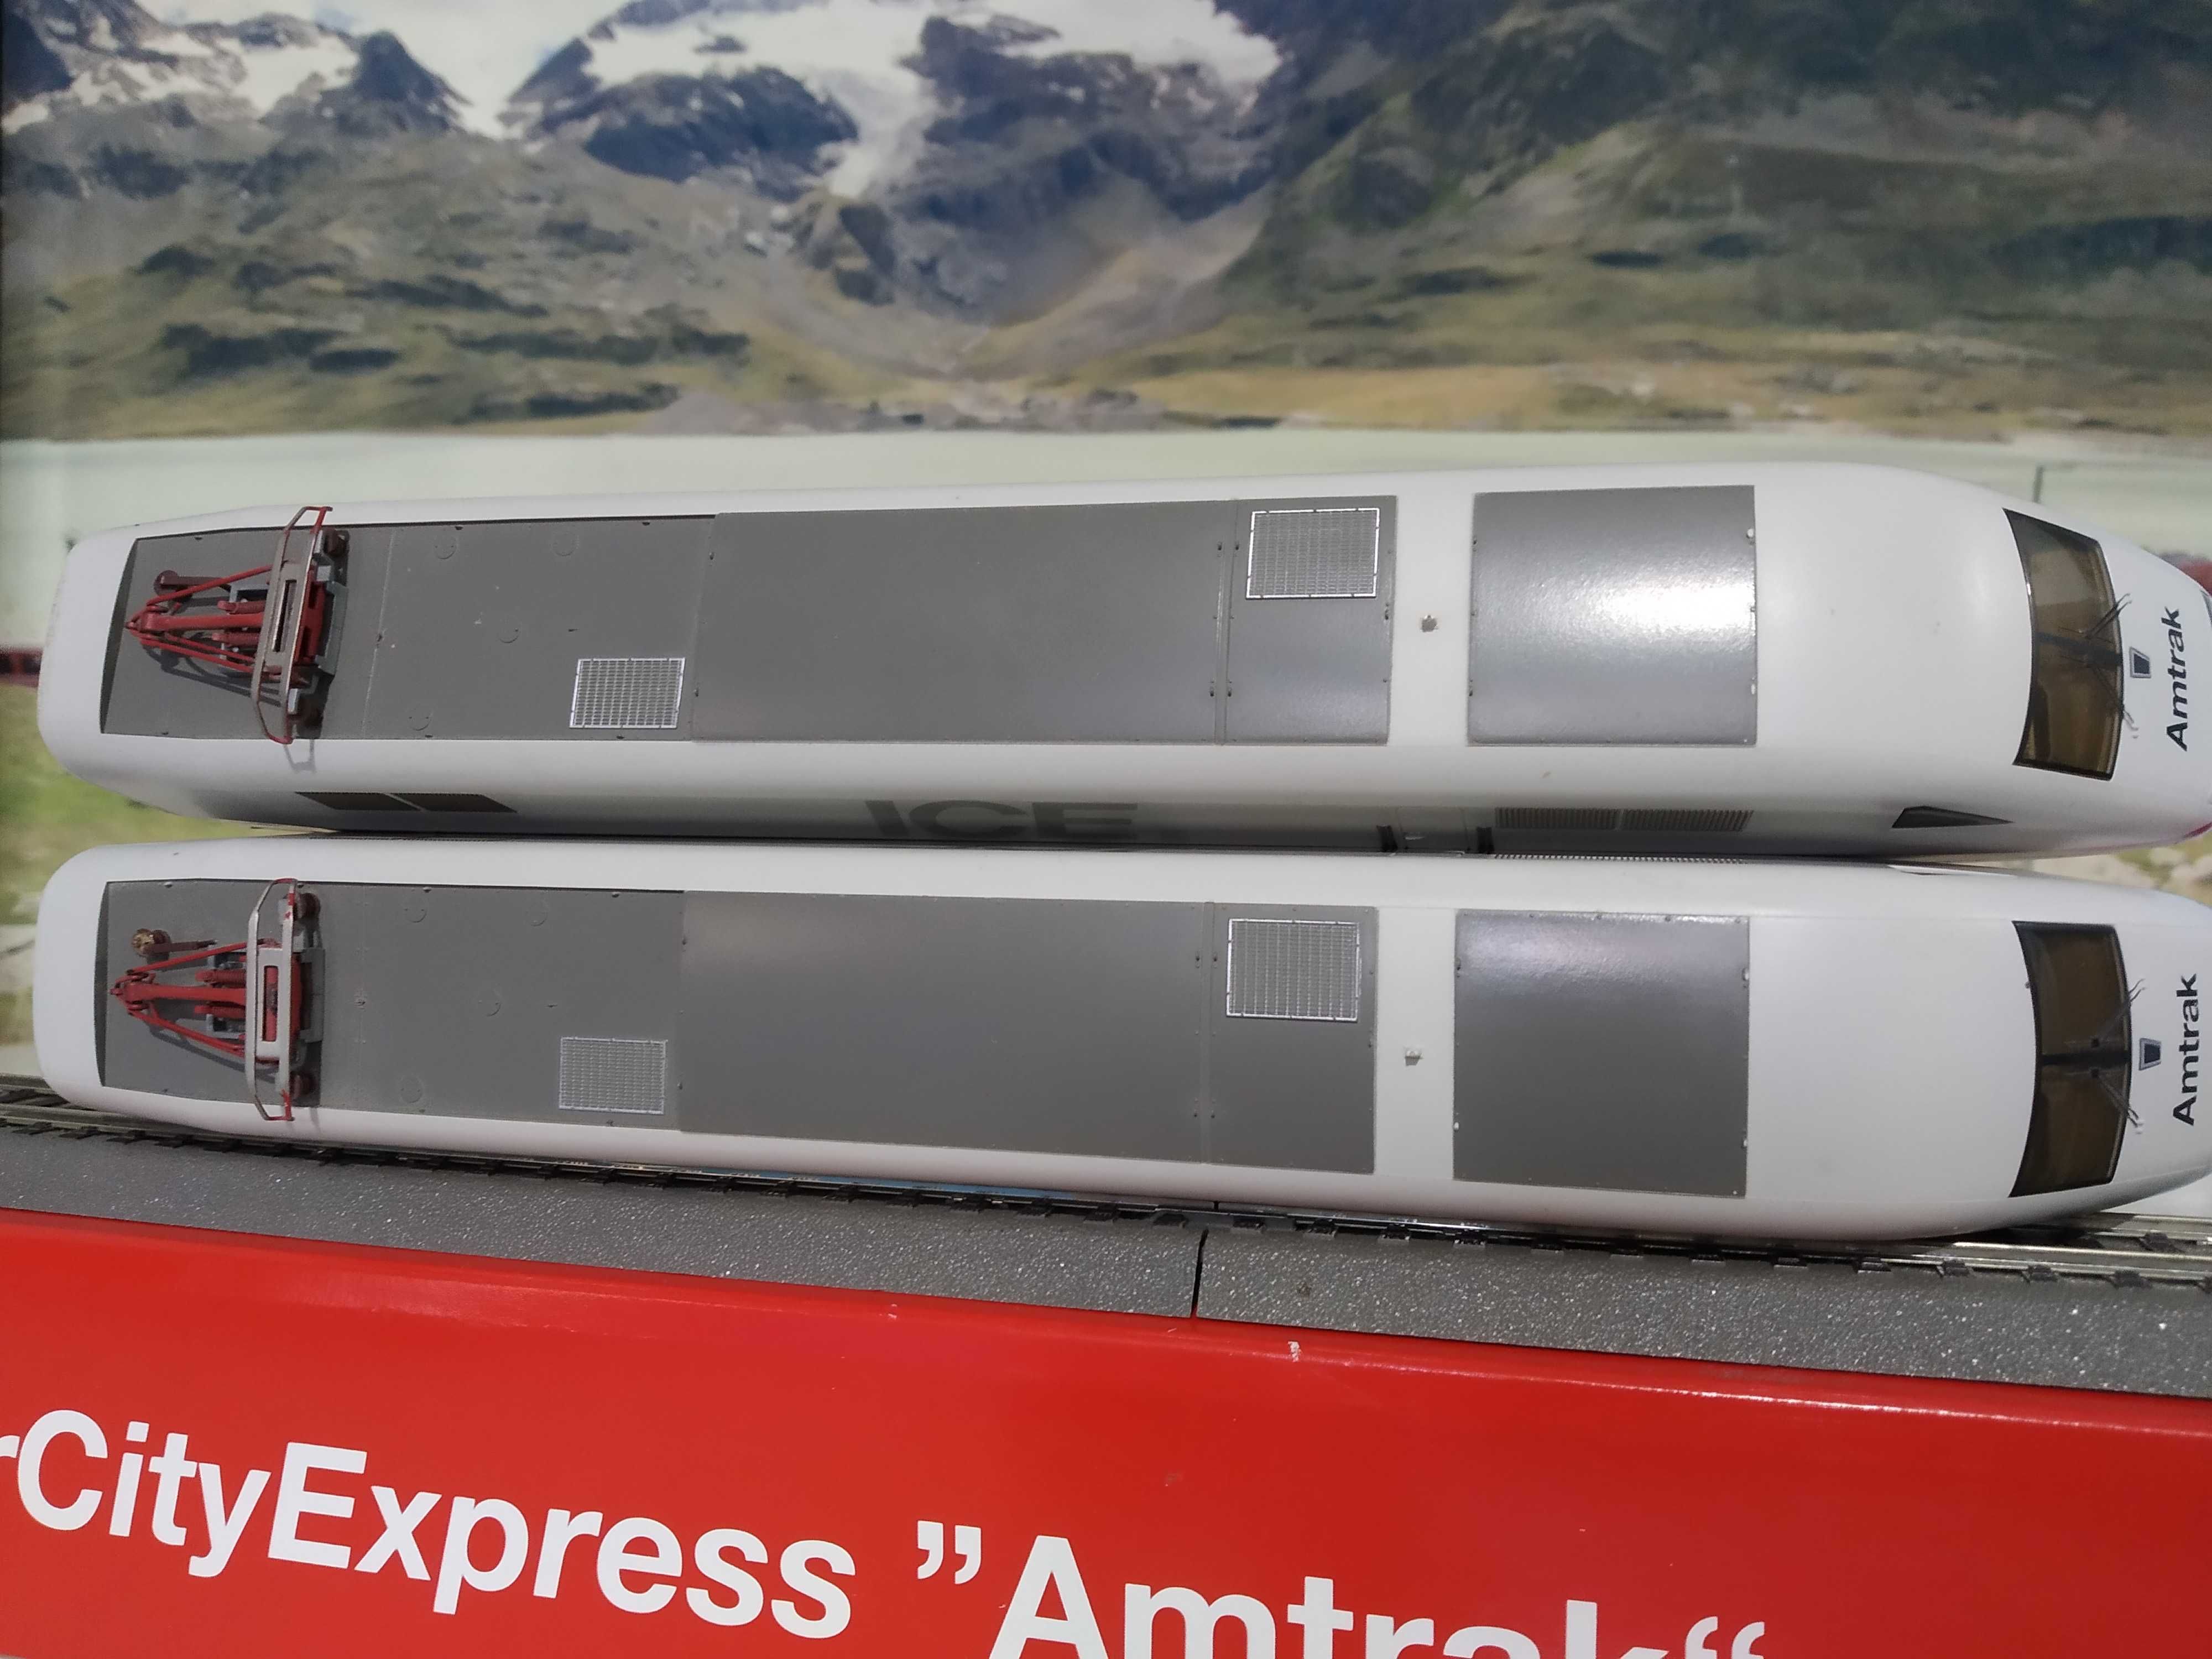 InterCity Express"Amtrak"-Fleischmann(digital),HO,trenulete electrice